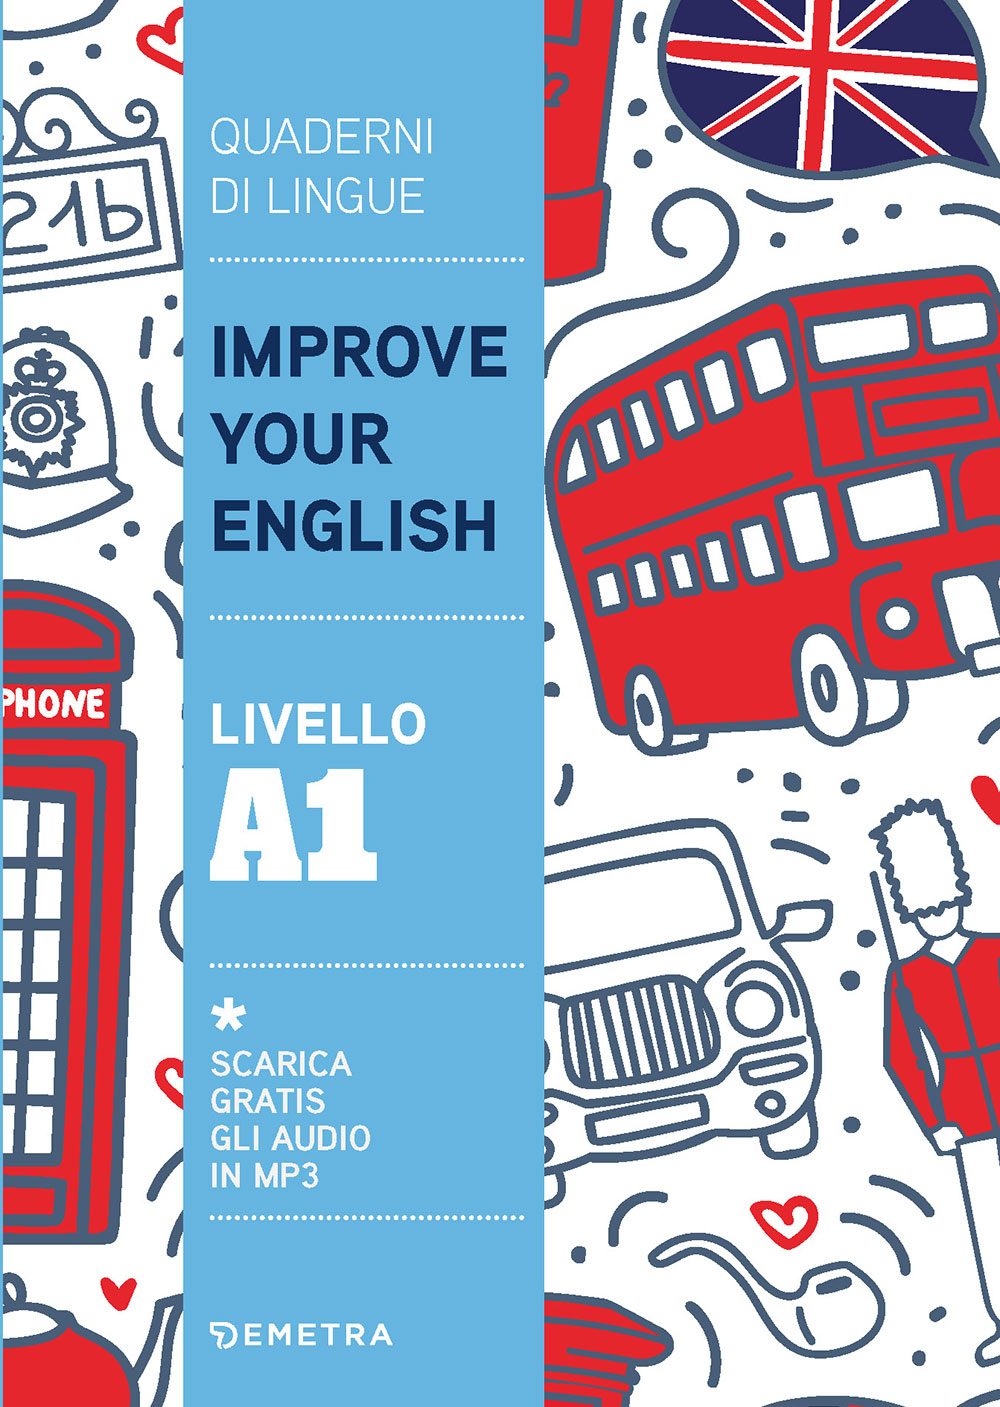 Improve your English livello A1